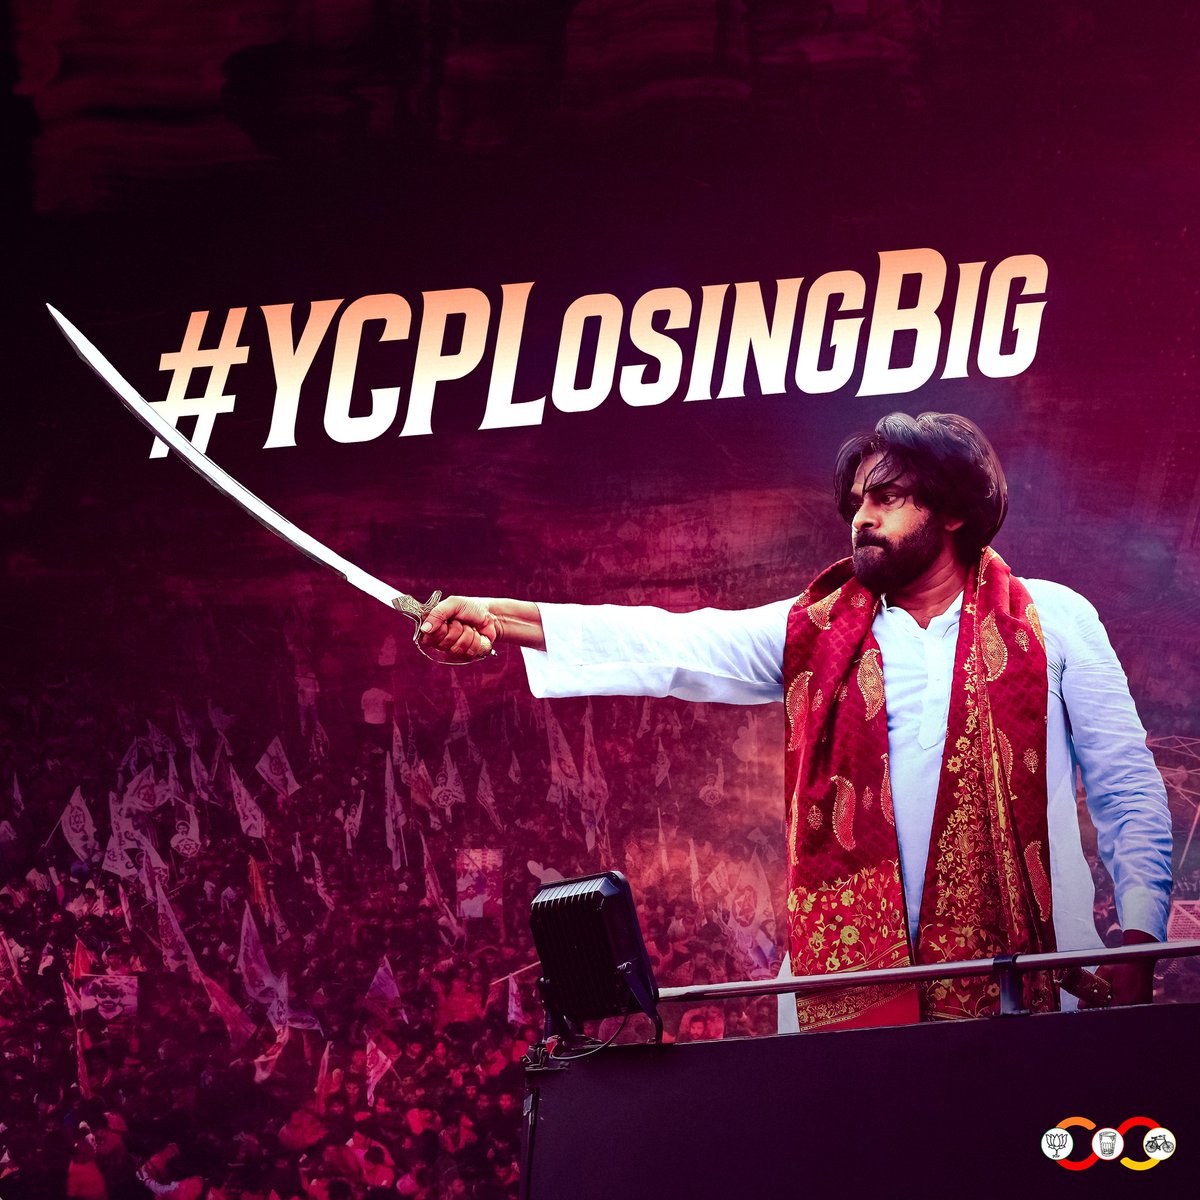 #YCPLosingBig in 2 days!